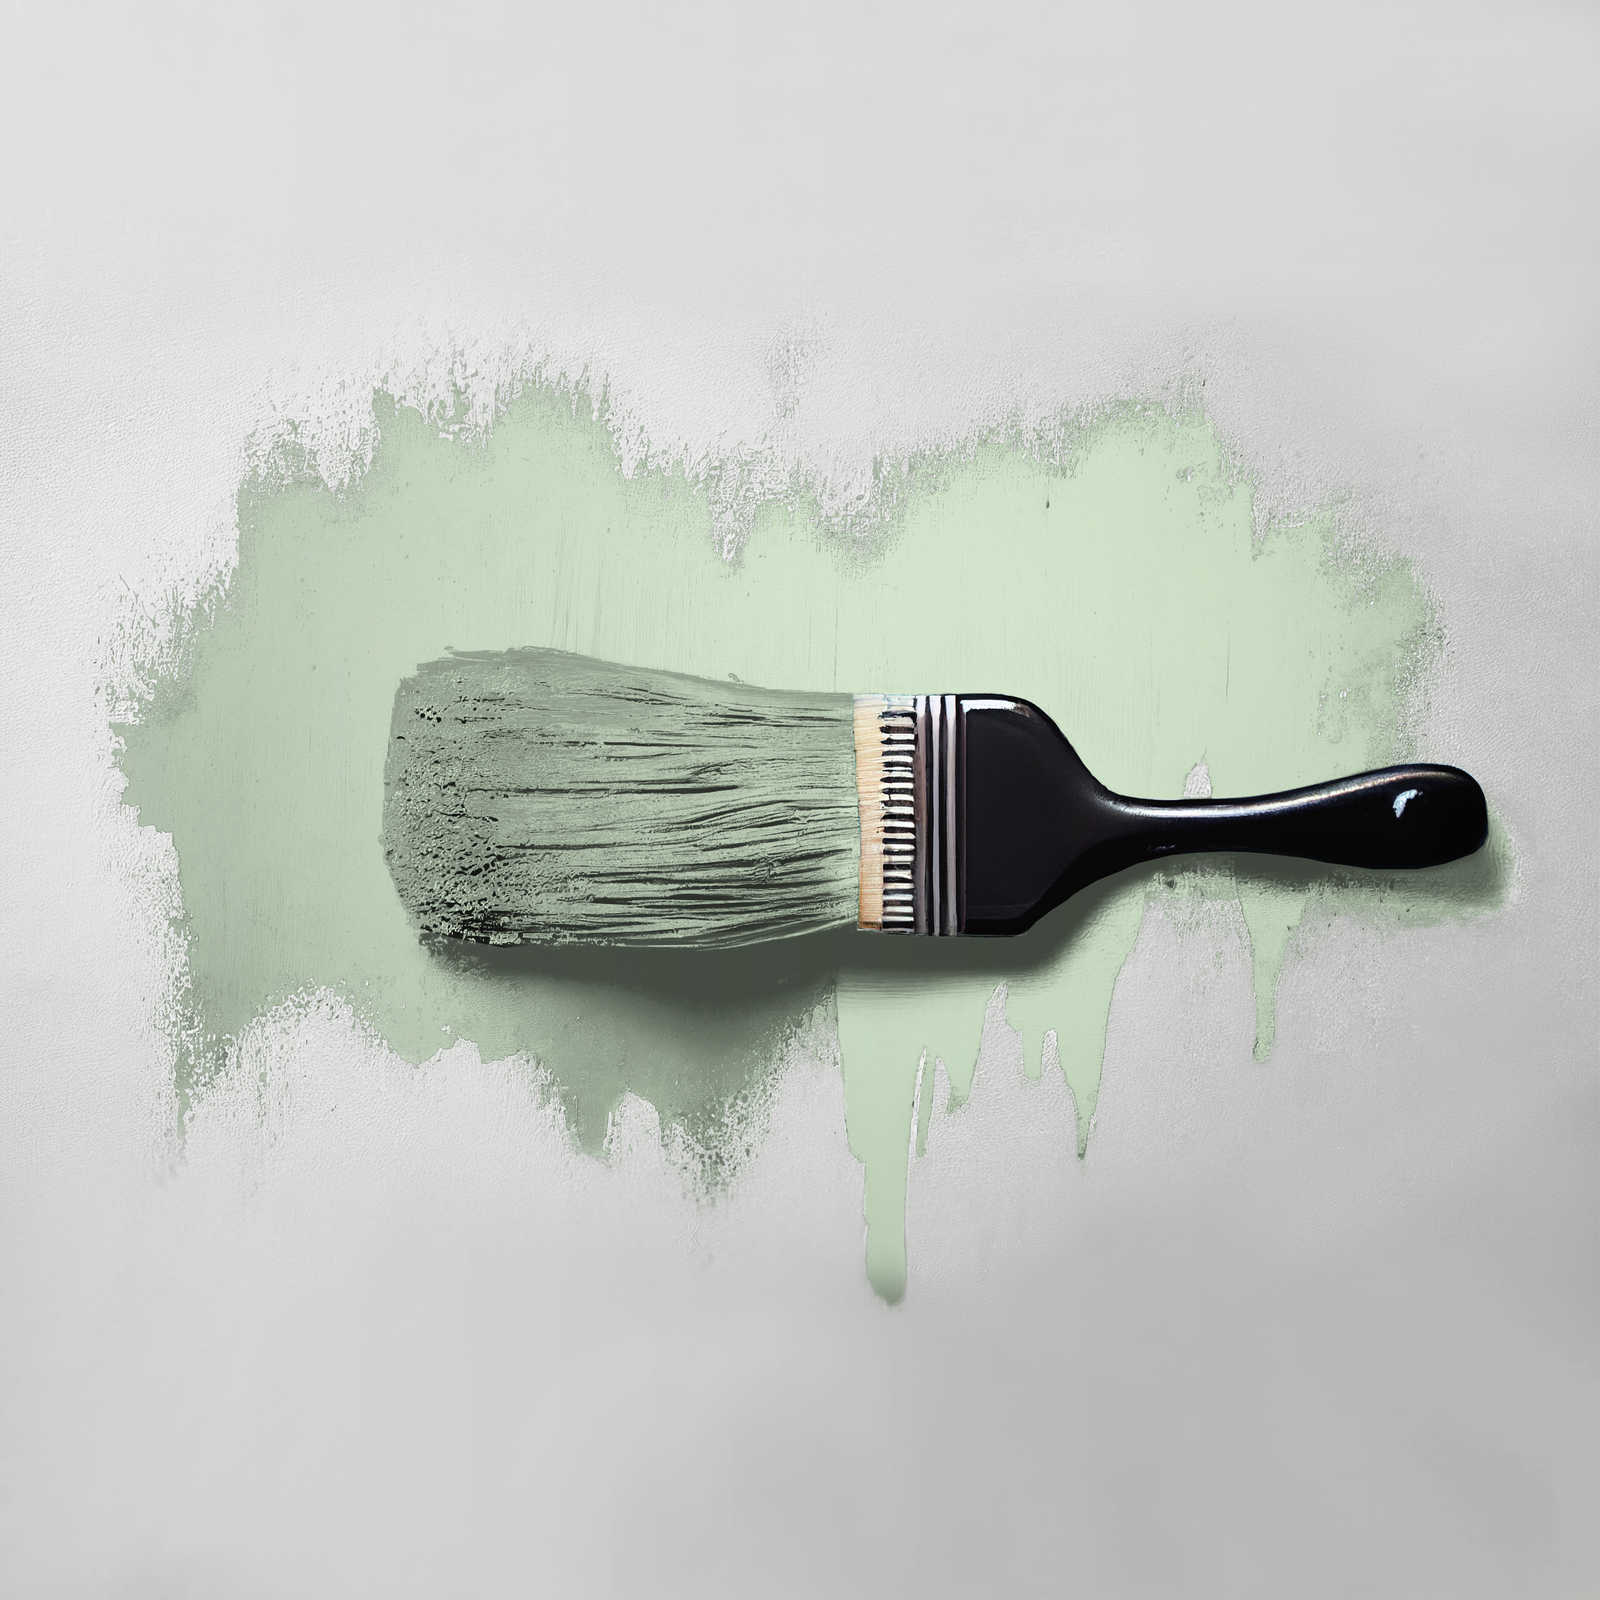             Pintura mural TCK4007 »Woodruff Cream« en verde pastel sereno – 2,5 litro
        